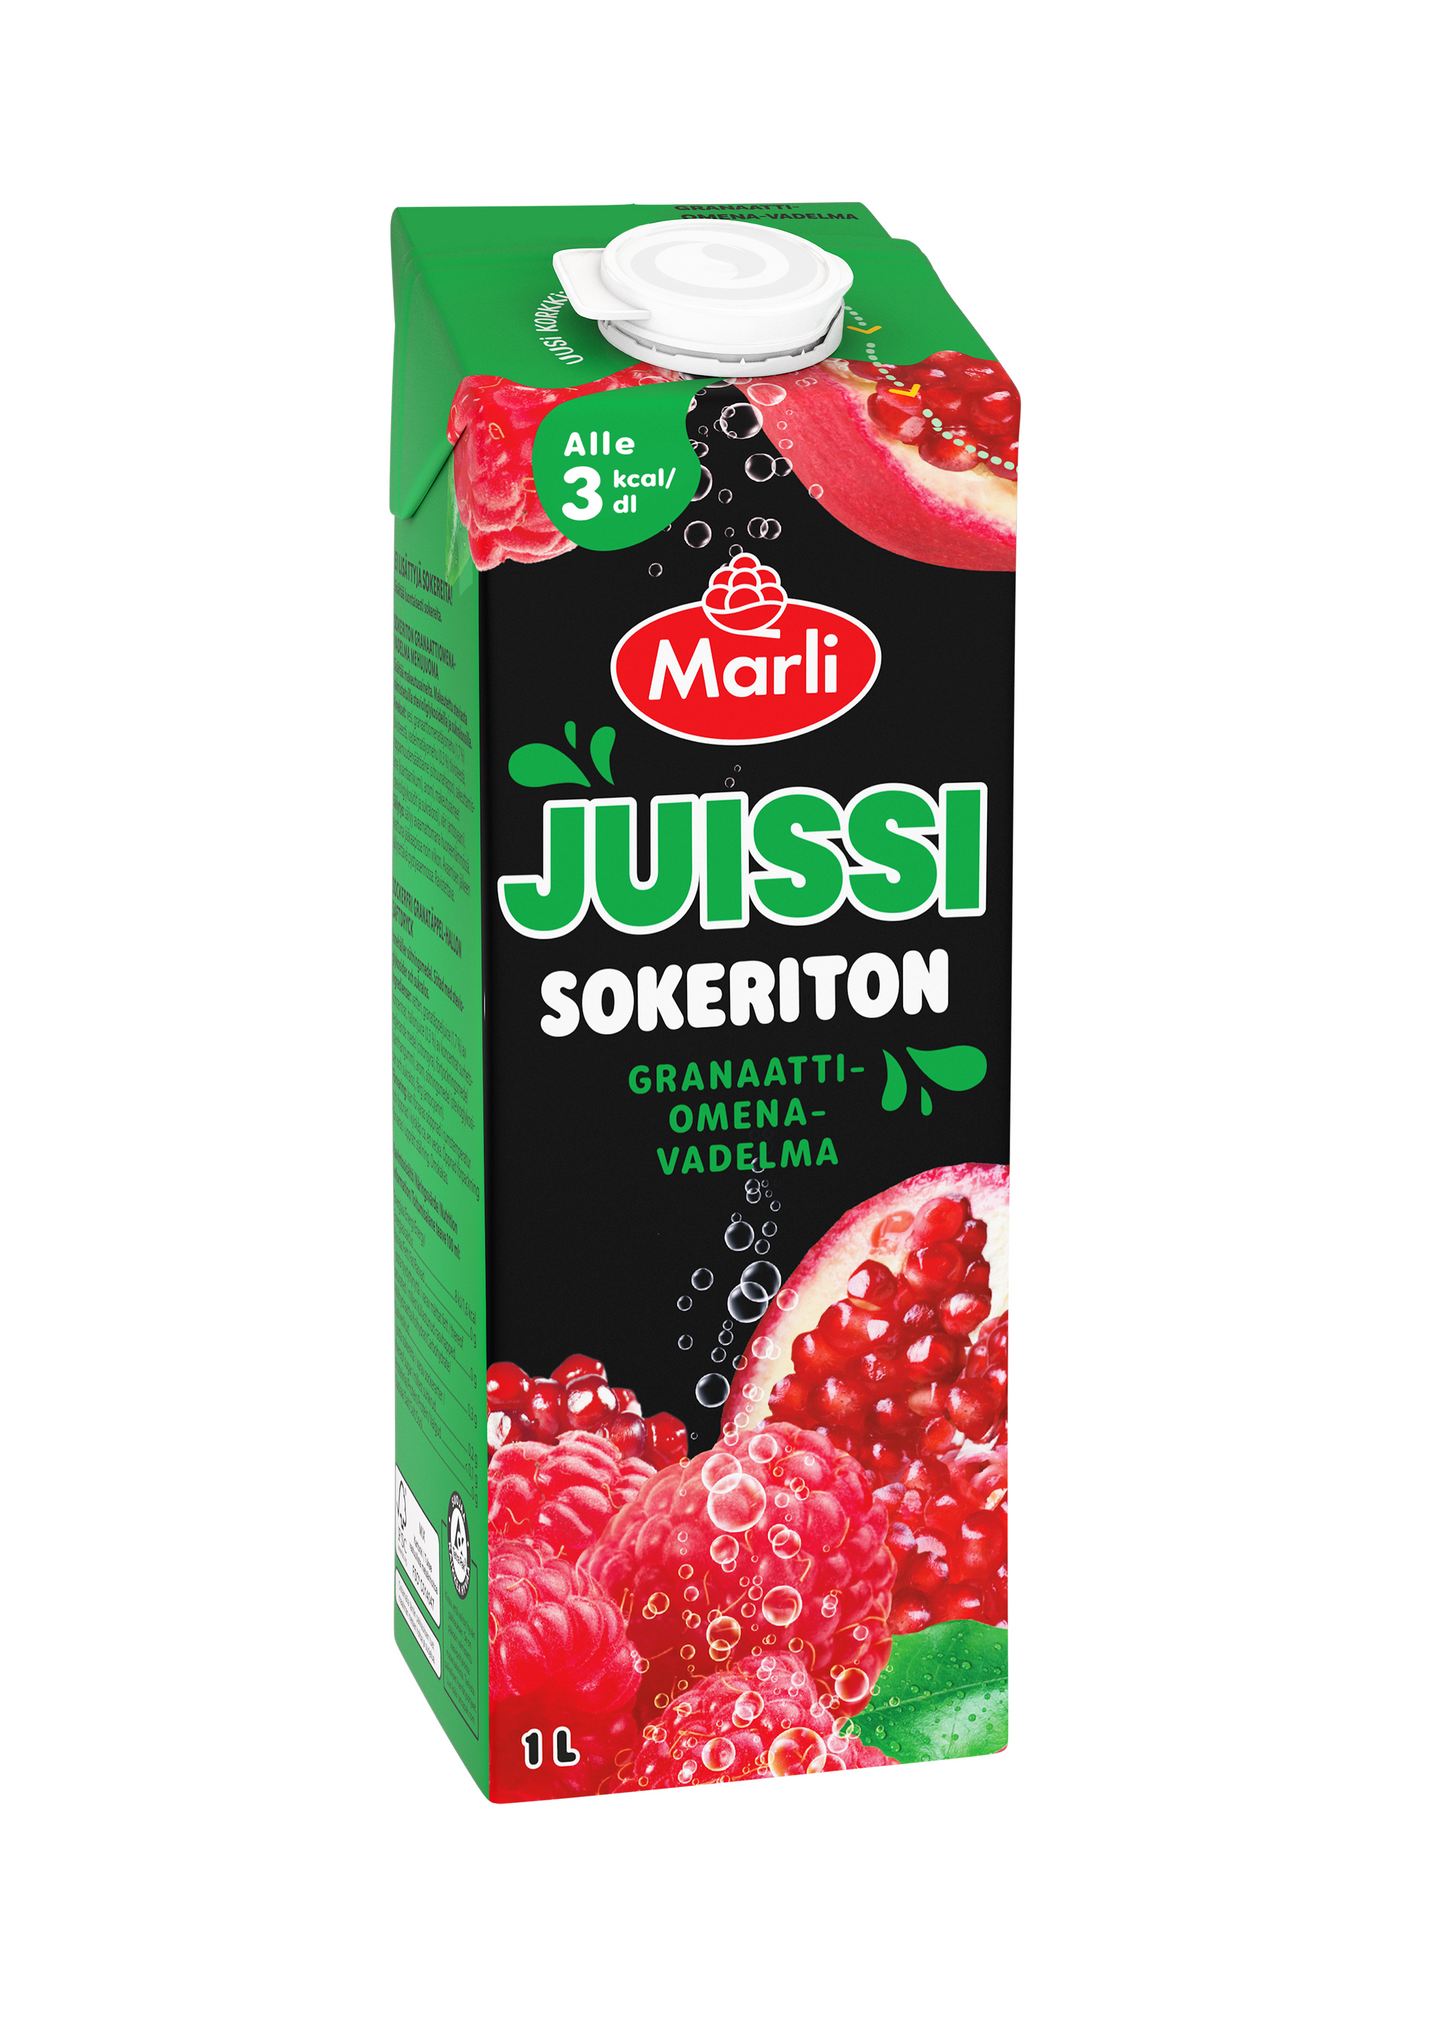 Marli Juissi sokeriton granaattiomena-vadelma 1l